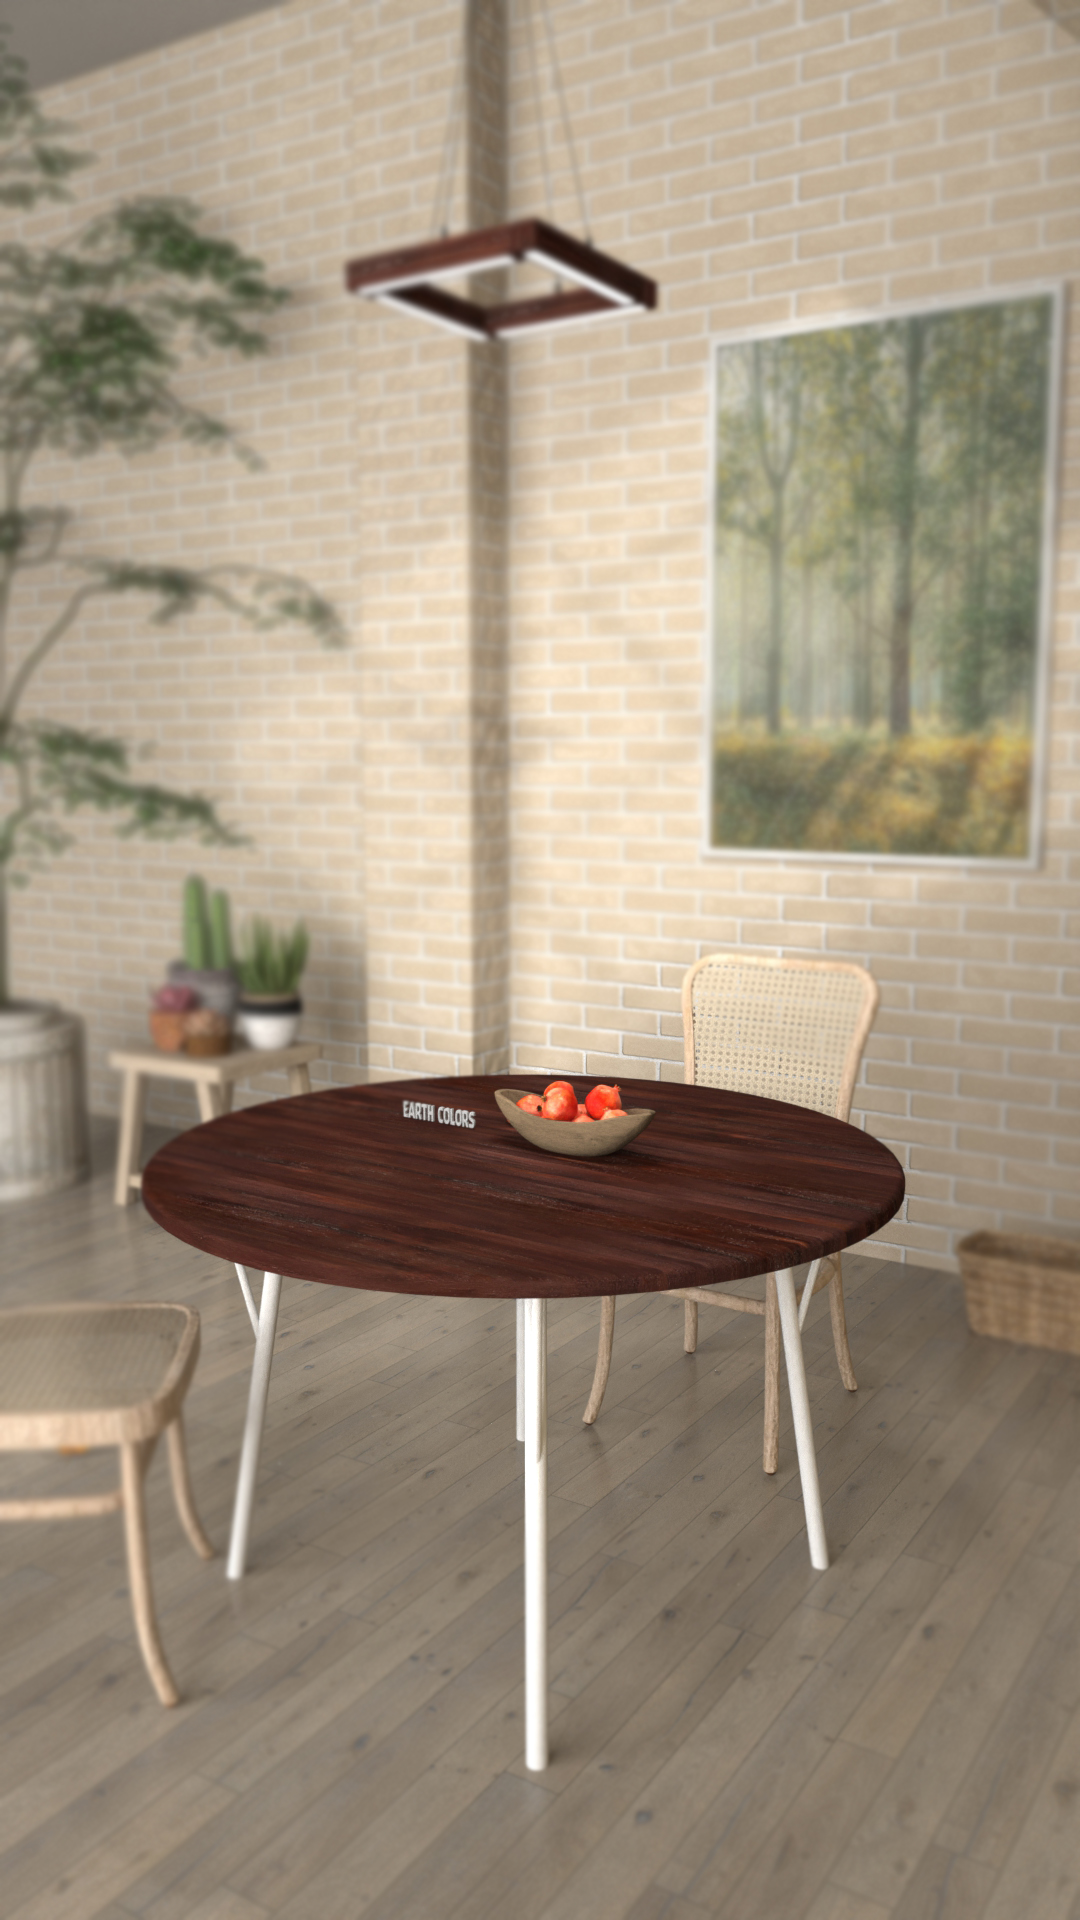 Round wood kitchen table